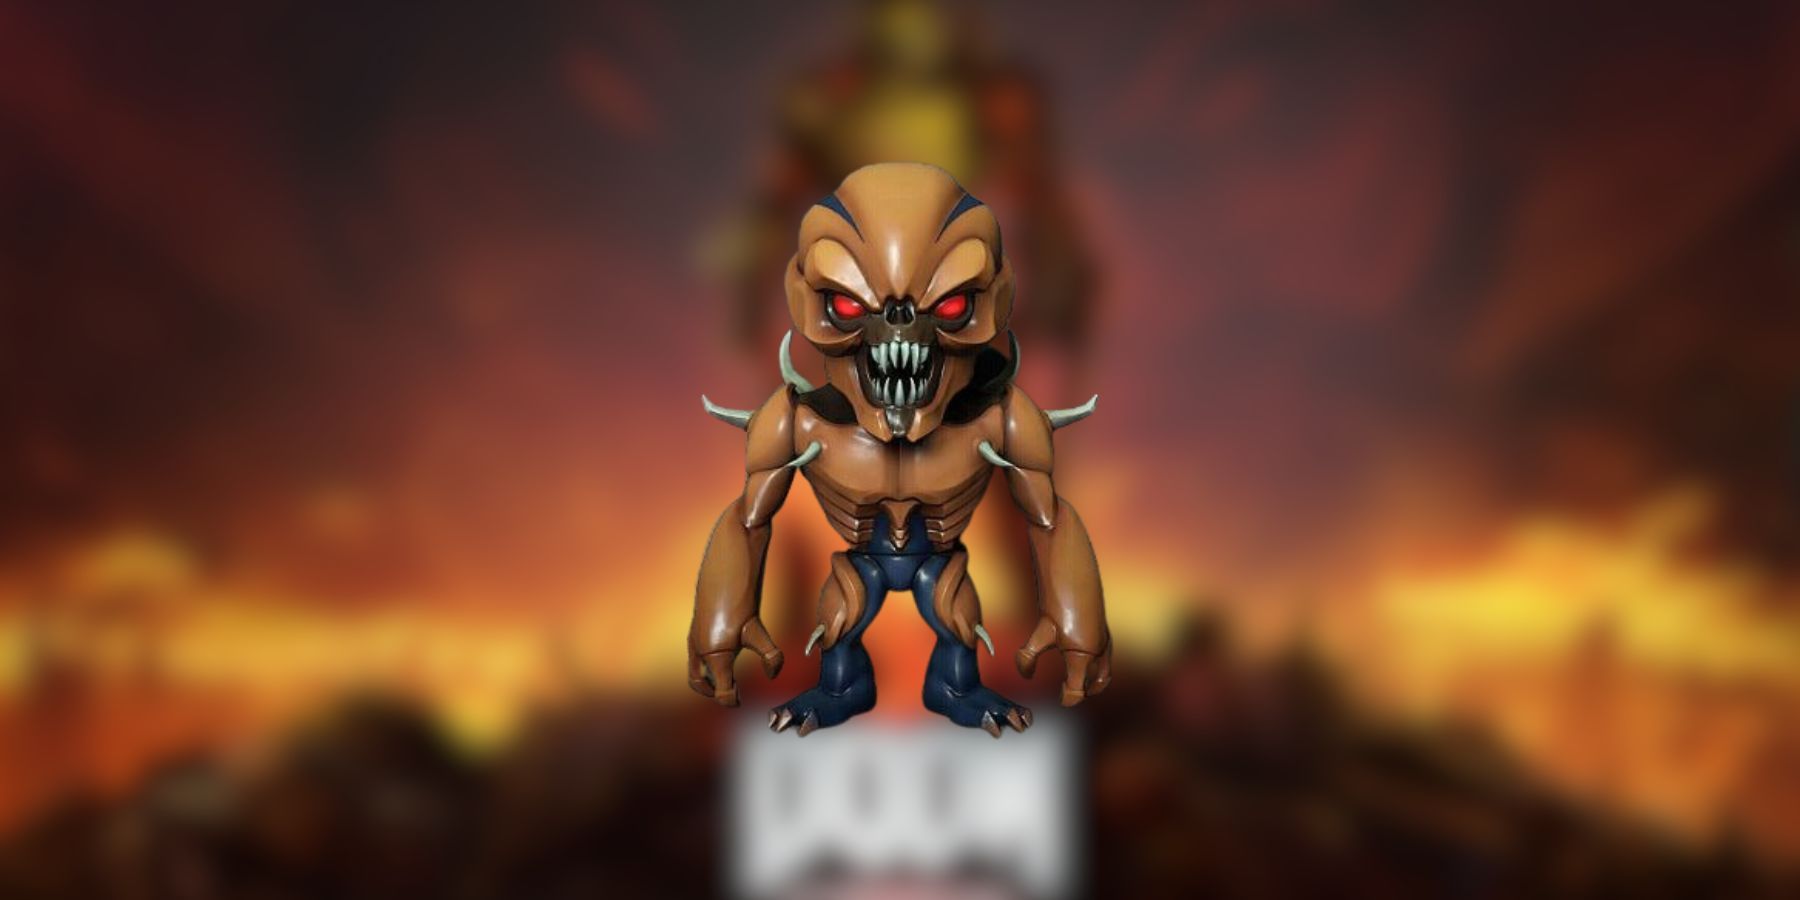 Imp Toy Preview in Doom Eternal